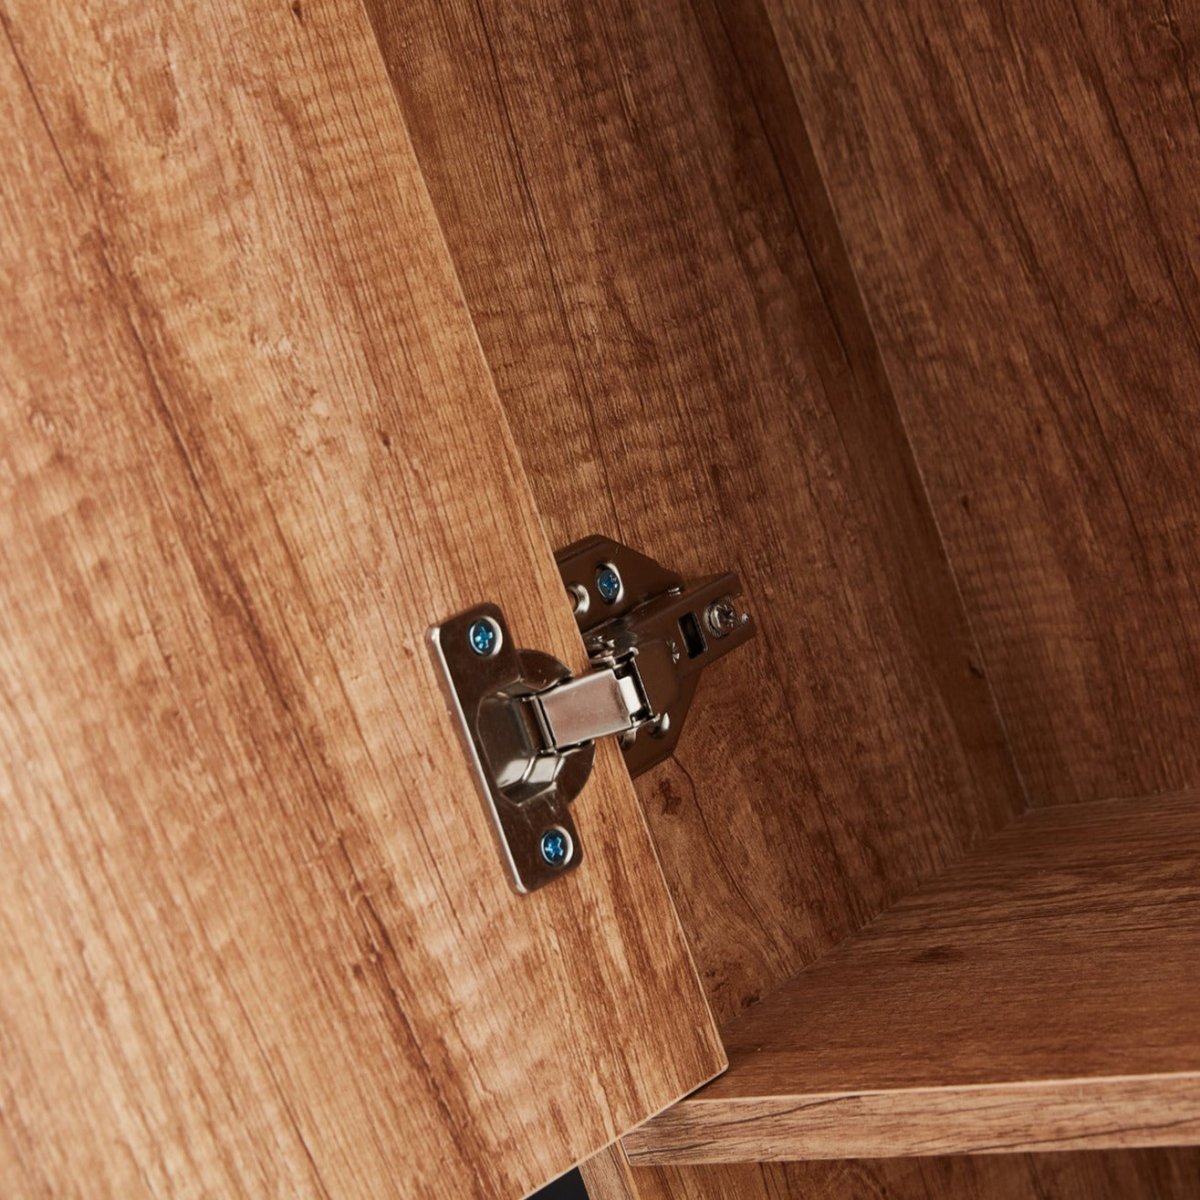 ExBrite Wood Over The Toilet Medicine Cabinet Wood